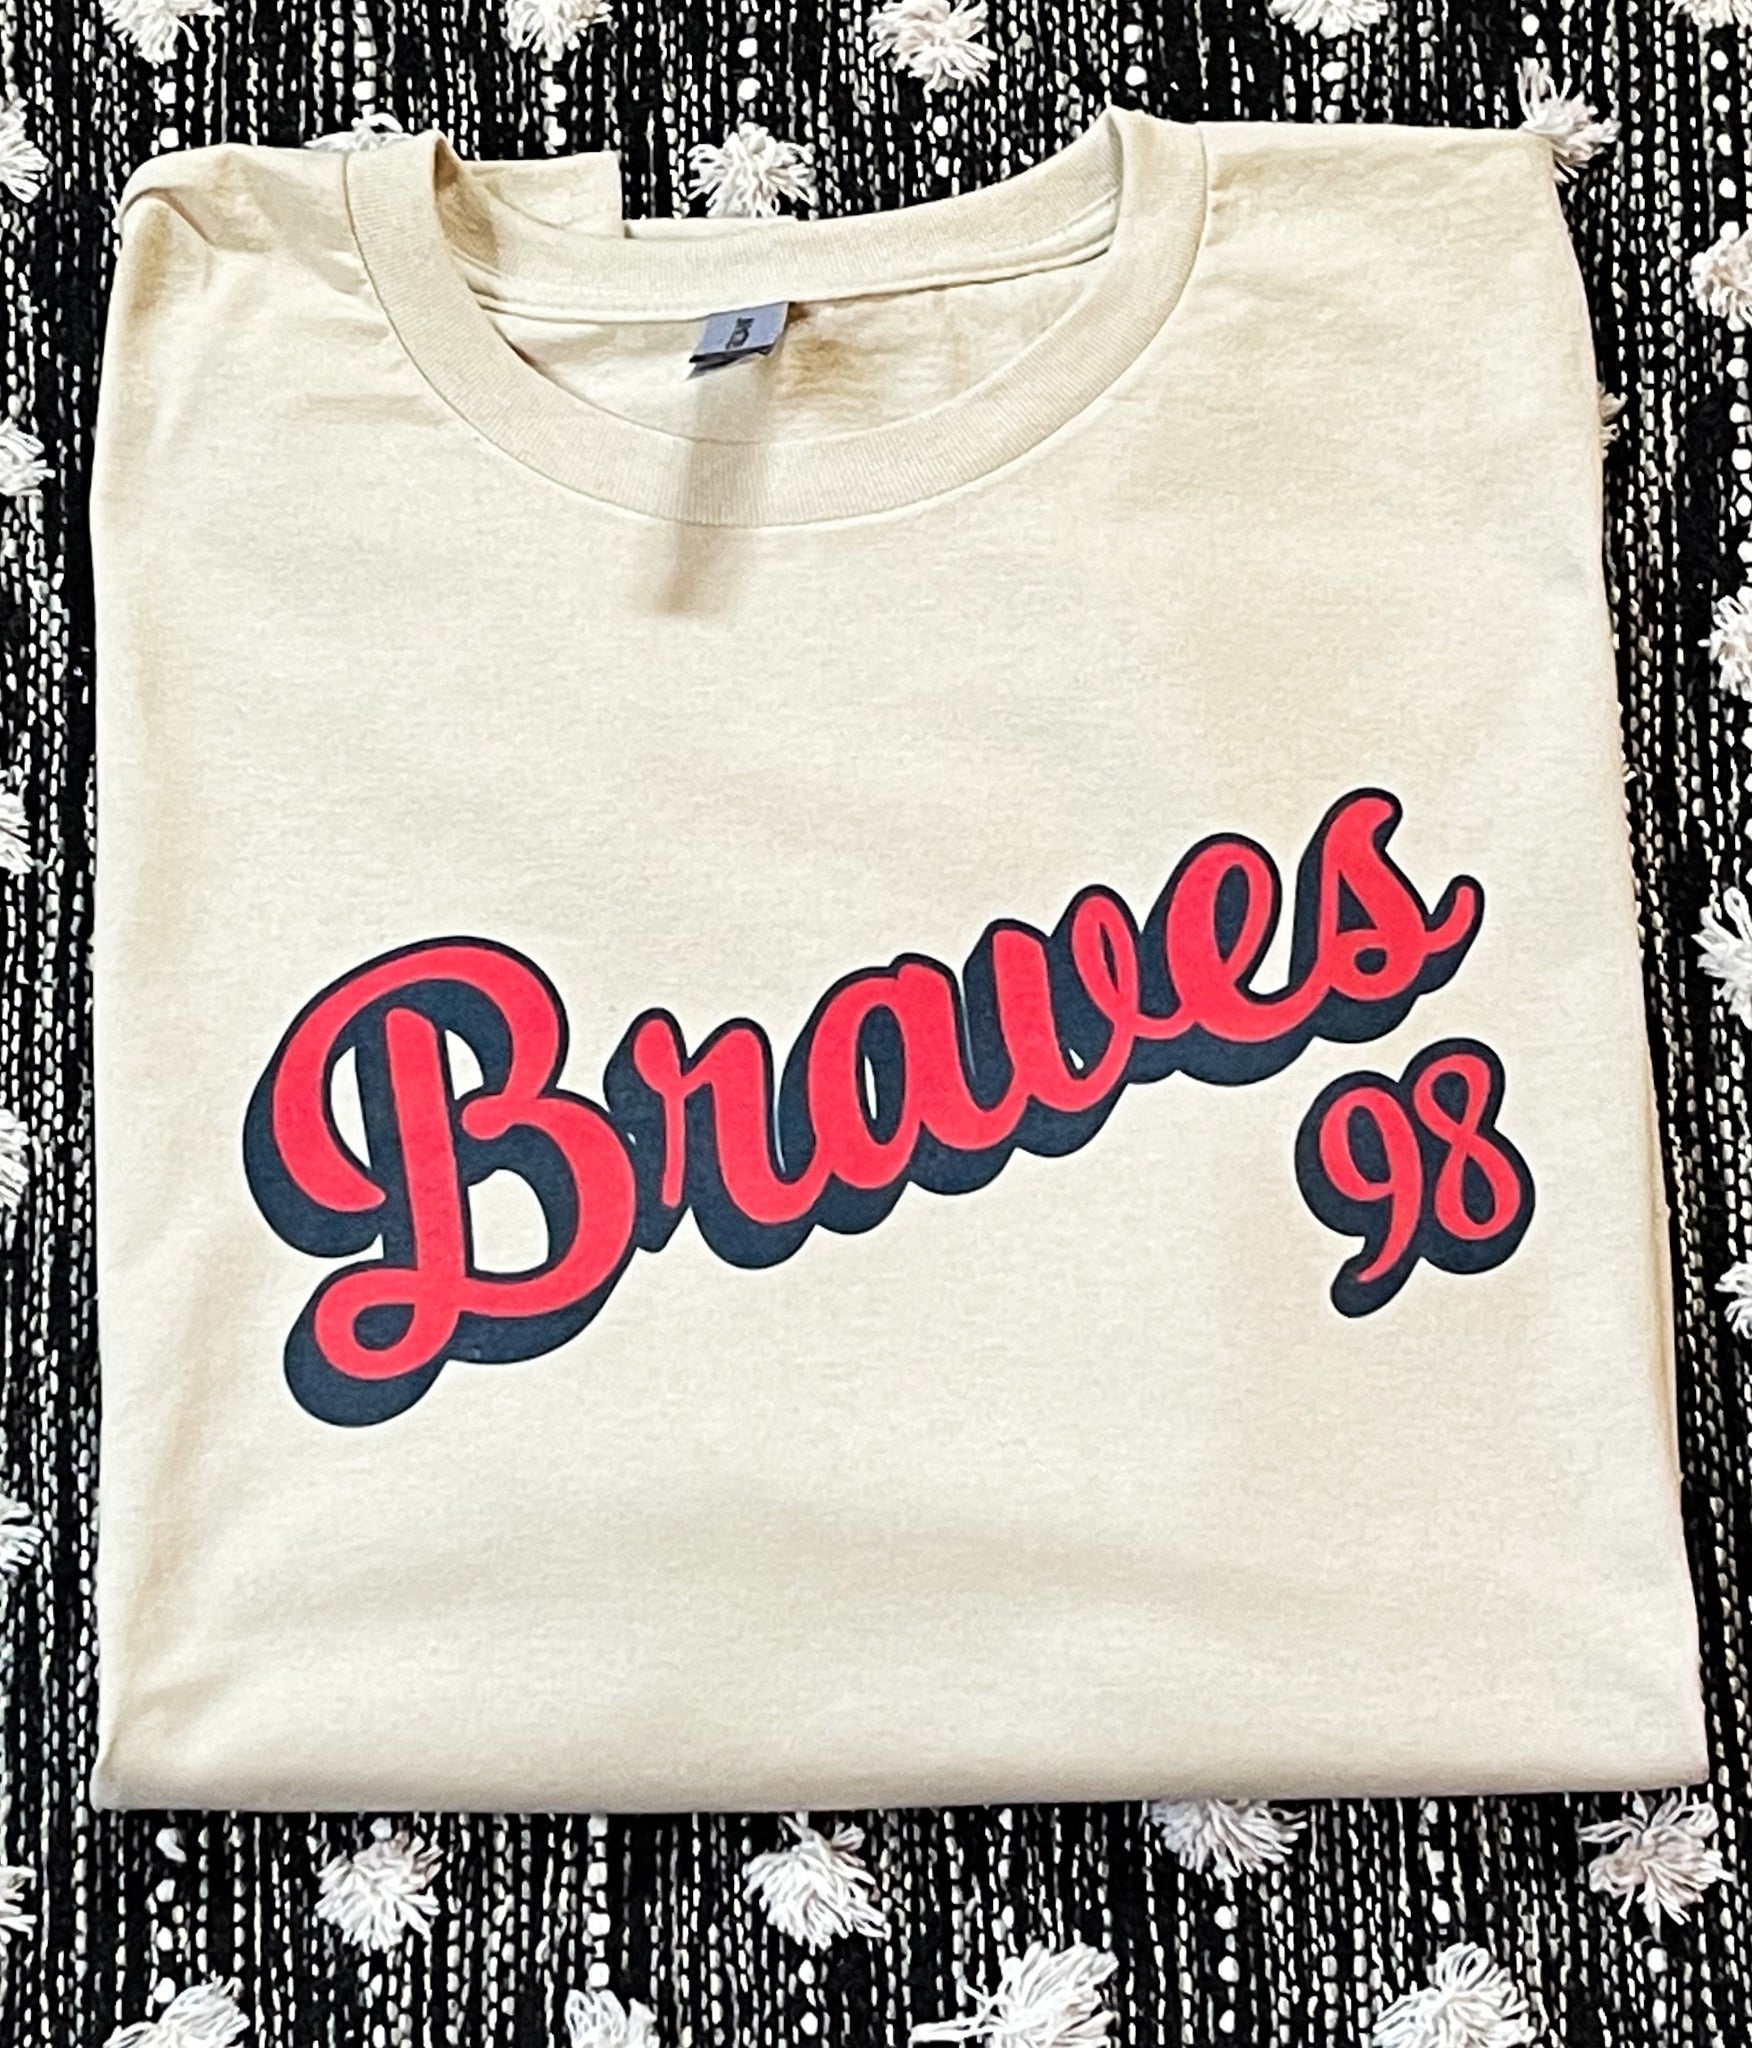 Braves 98